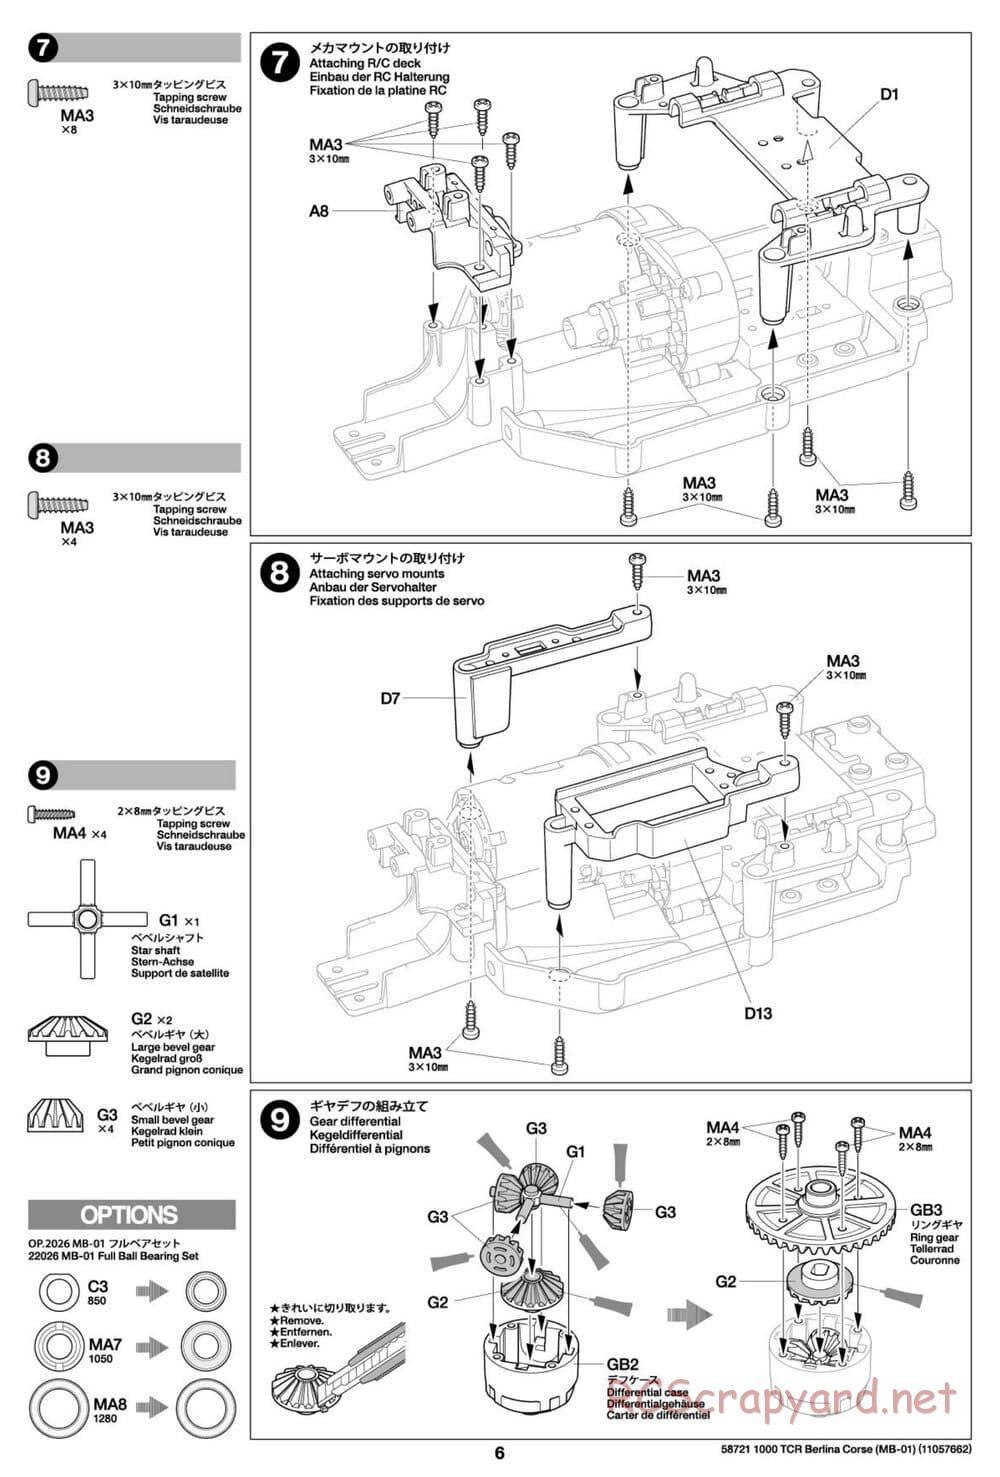 Tamiya - Fiat Abarth 1000 TCR Berlina Corsa - MB-01 Chassis - Manual - Page 6